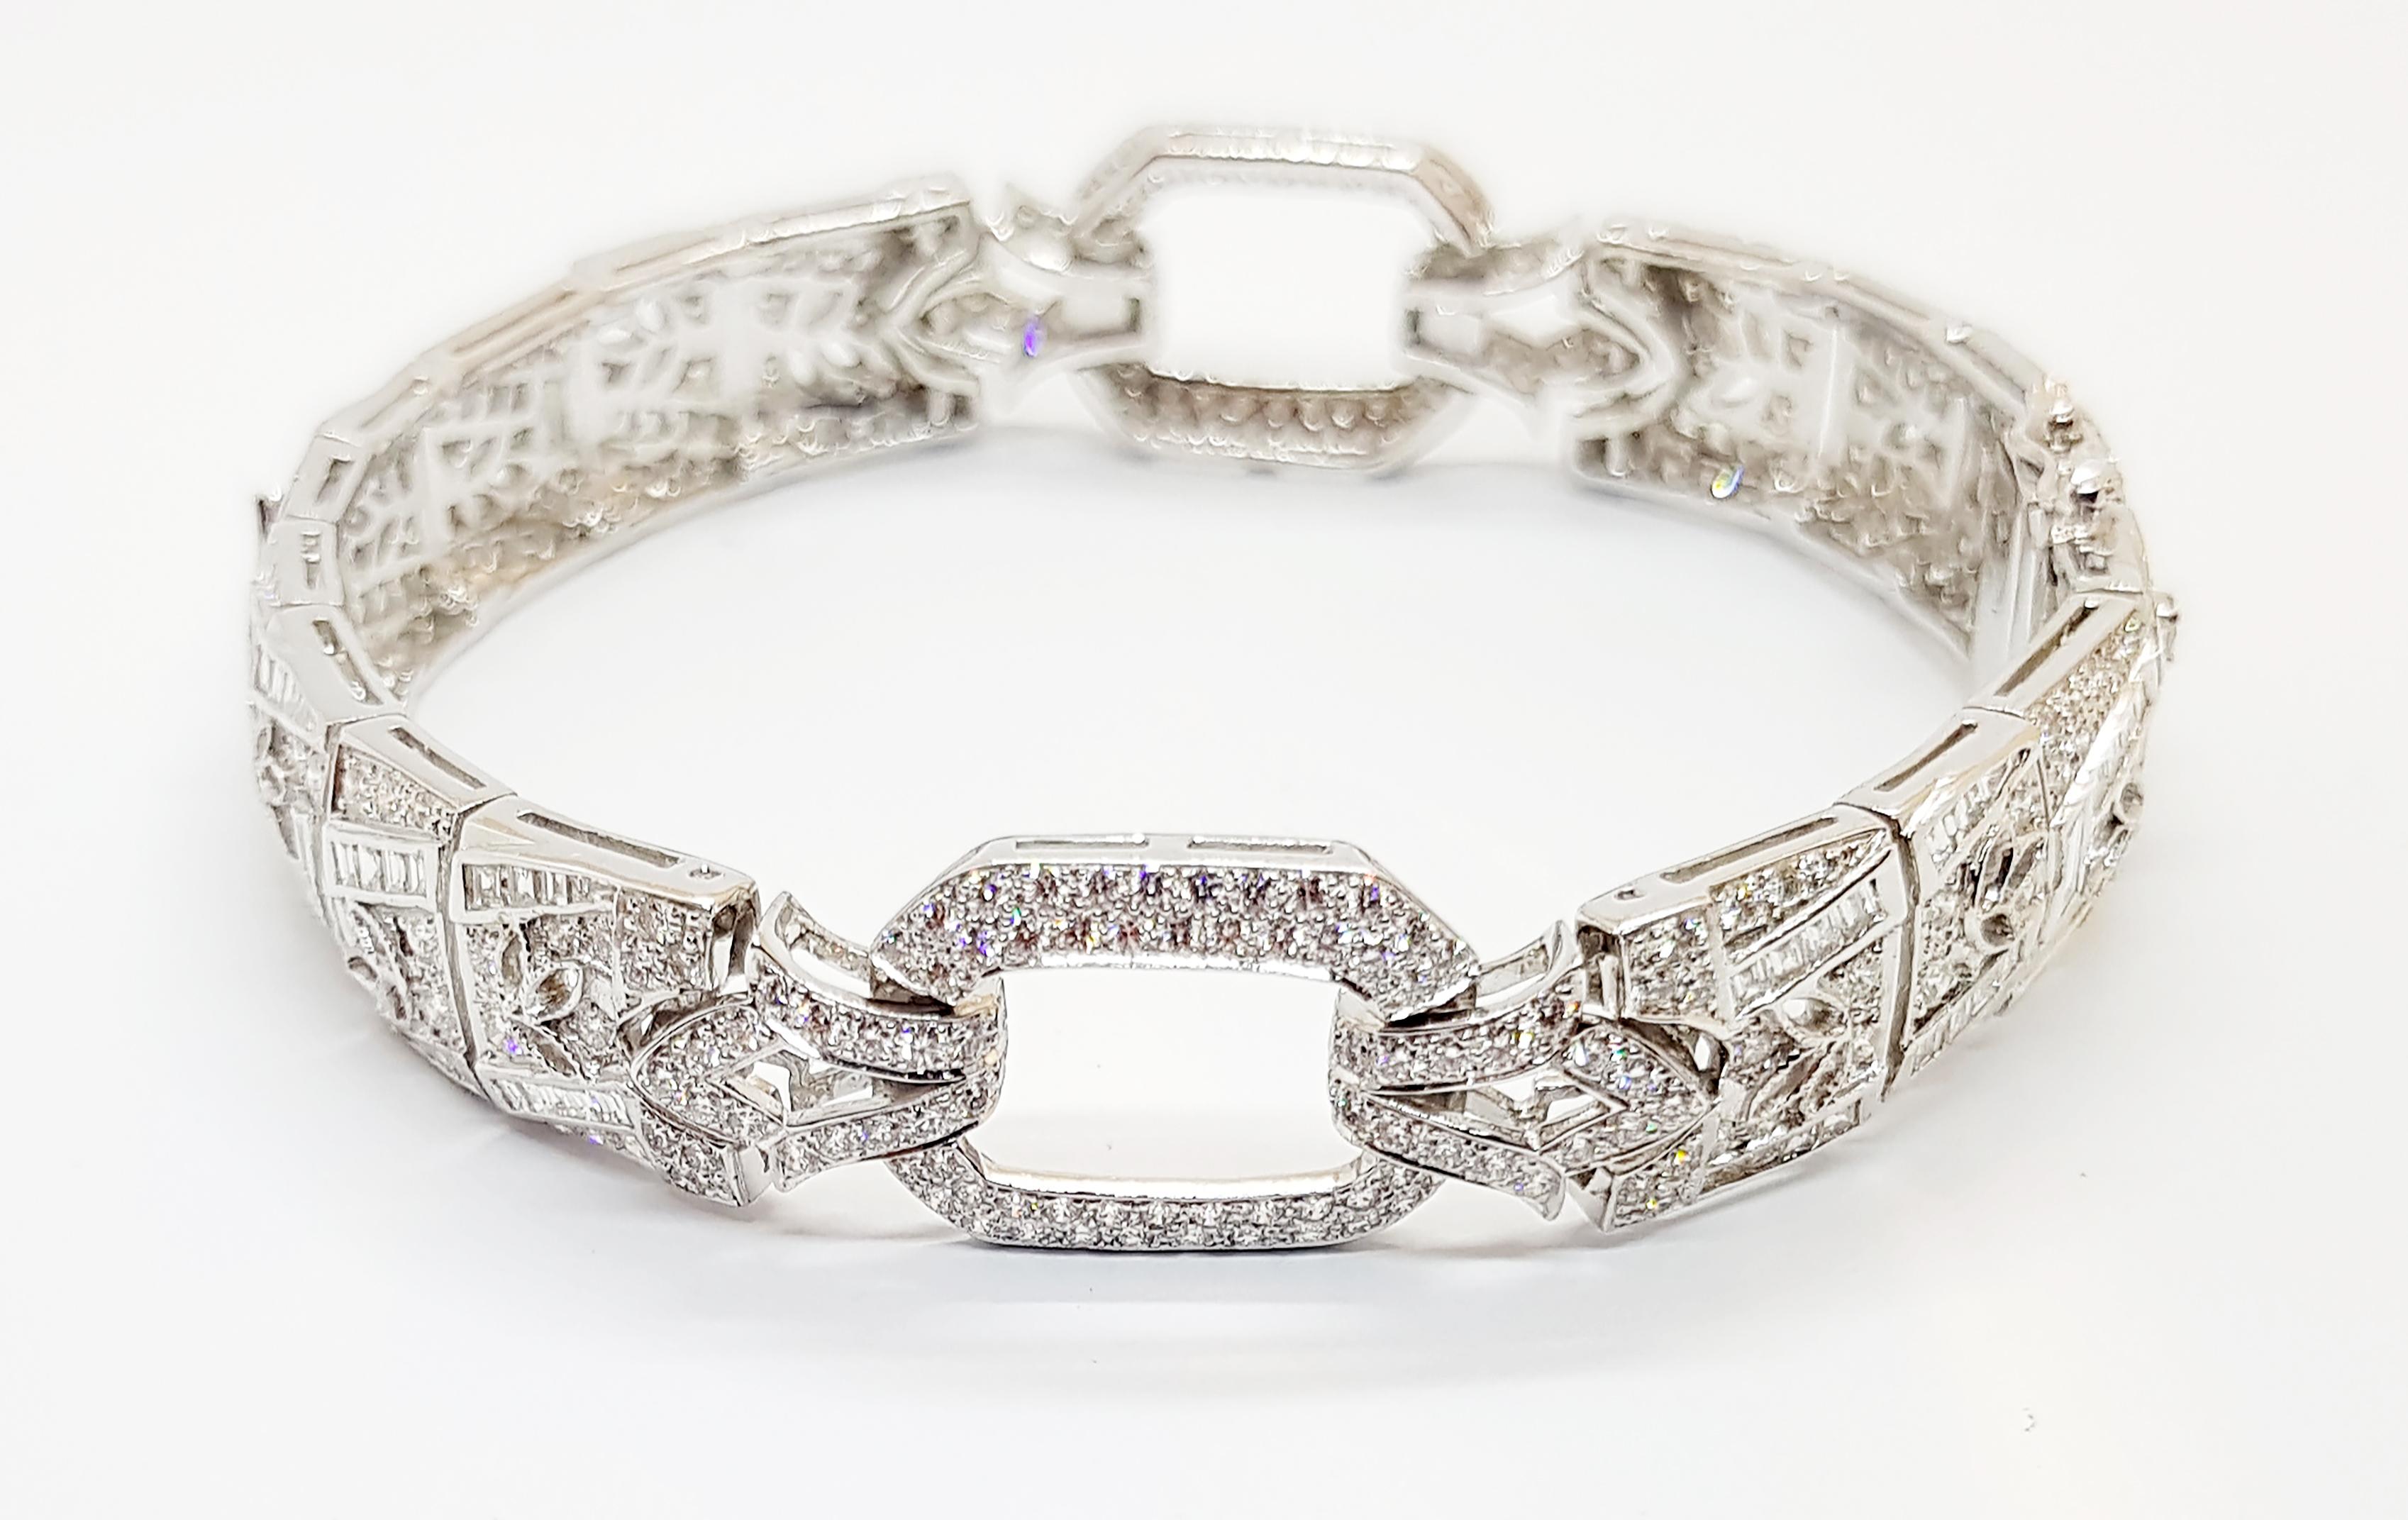 Diamond 5.40 carats Bracelet set in 18 Karat White Gold Settings

Width:  1.0 cm 
Length: 18.0 cm
Total Weight: 29.5 grams

